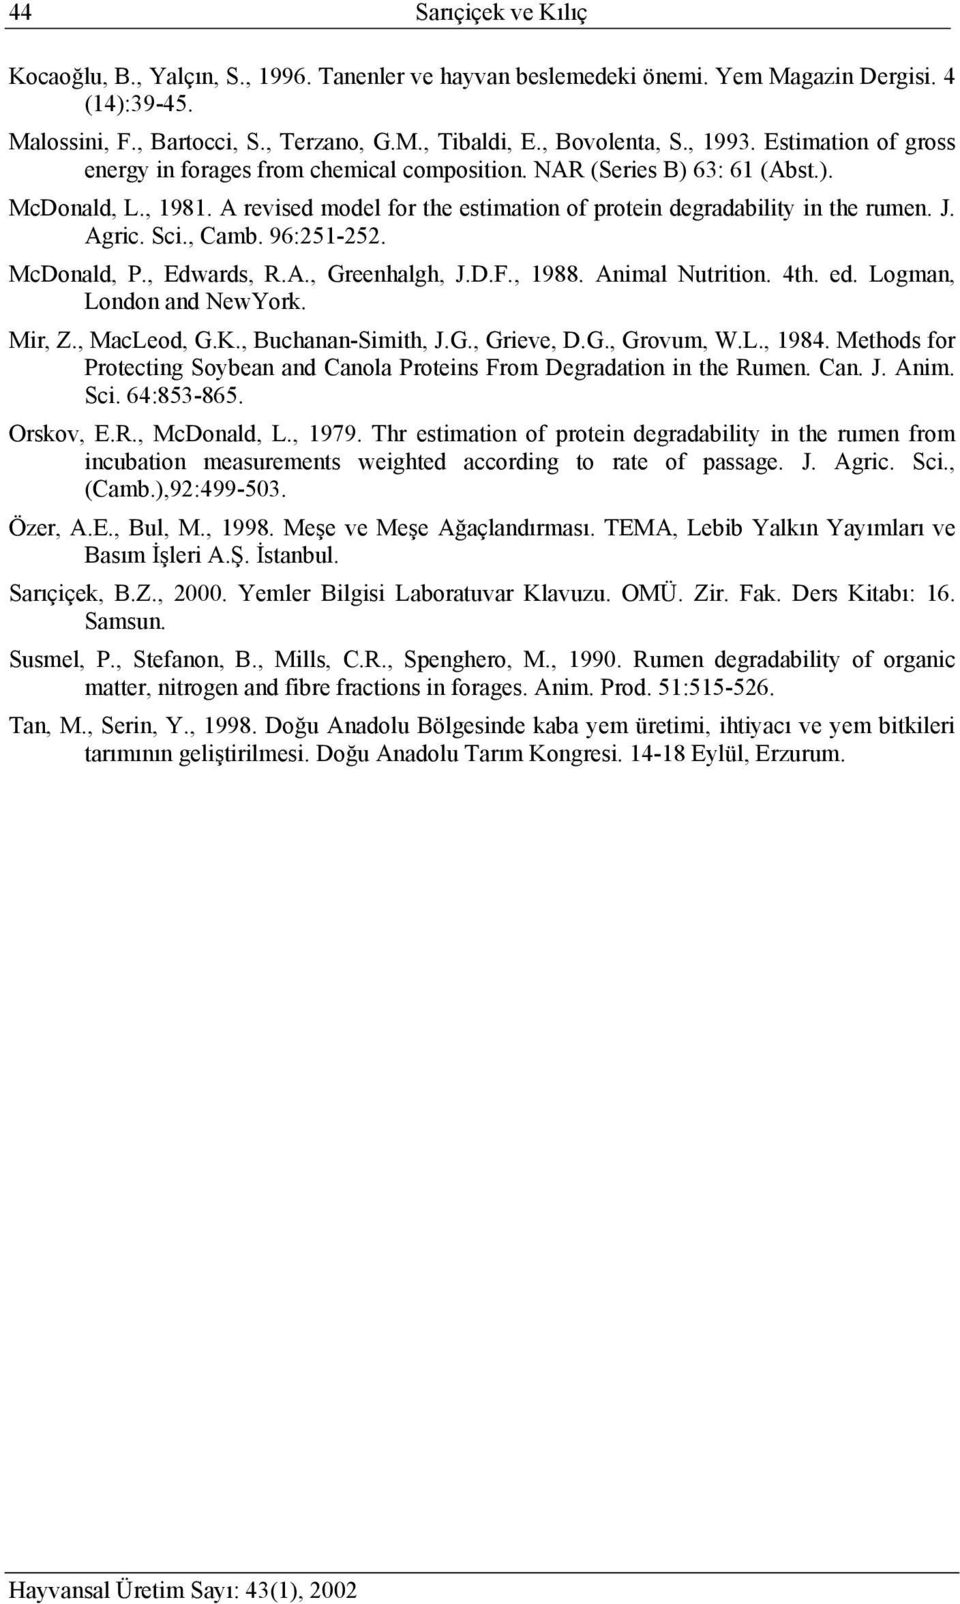 Agric. Sci., Camb. 96:251-252. McDonald, P., Edwards, R.A., Greenhalgh, J.D.F., 1988. Animal Nutrition. 4th. ed. Logman, London and NewYork. Mir, Z., MacLeod, G.K., Buchanan-Simith, J.G., Grieve, D.G., Grovum, W.